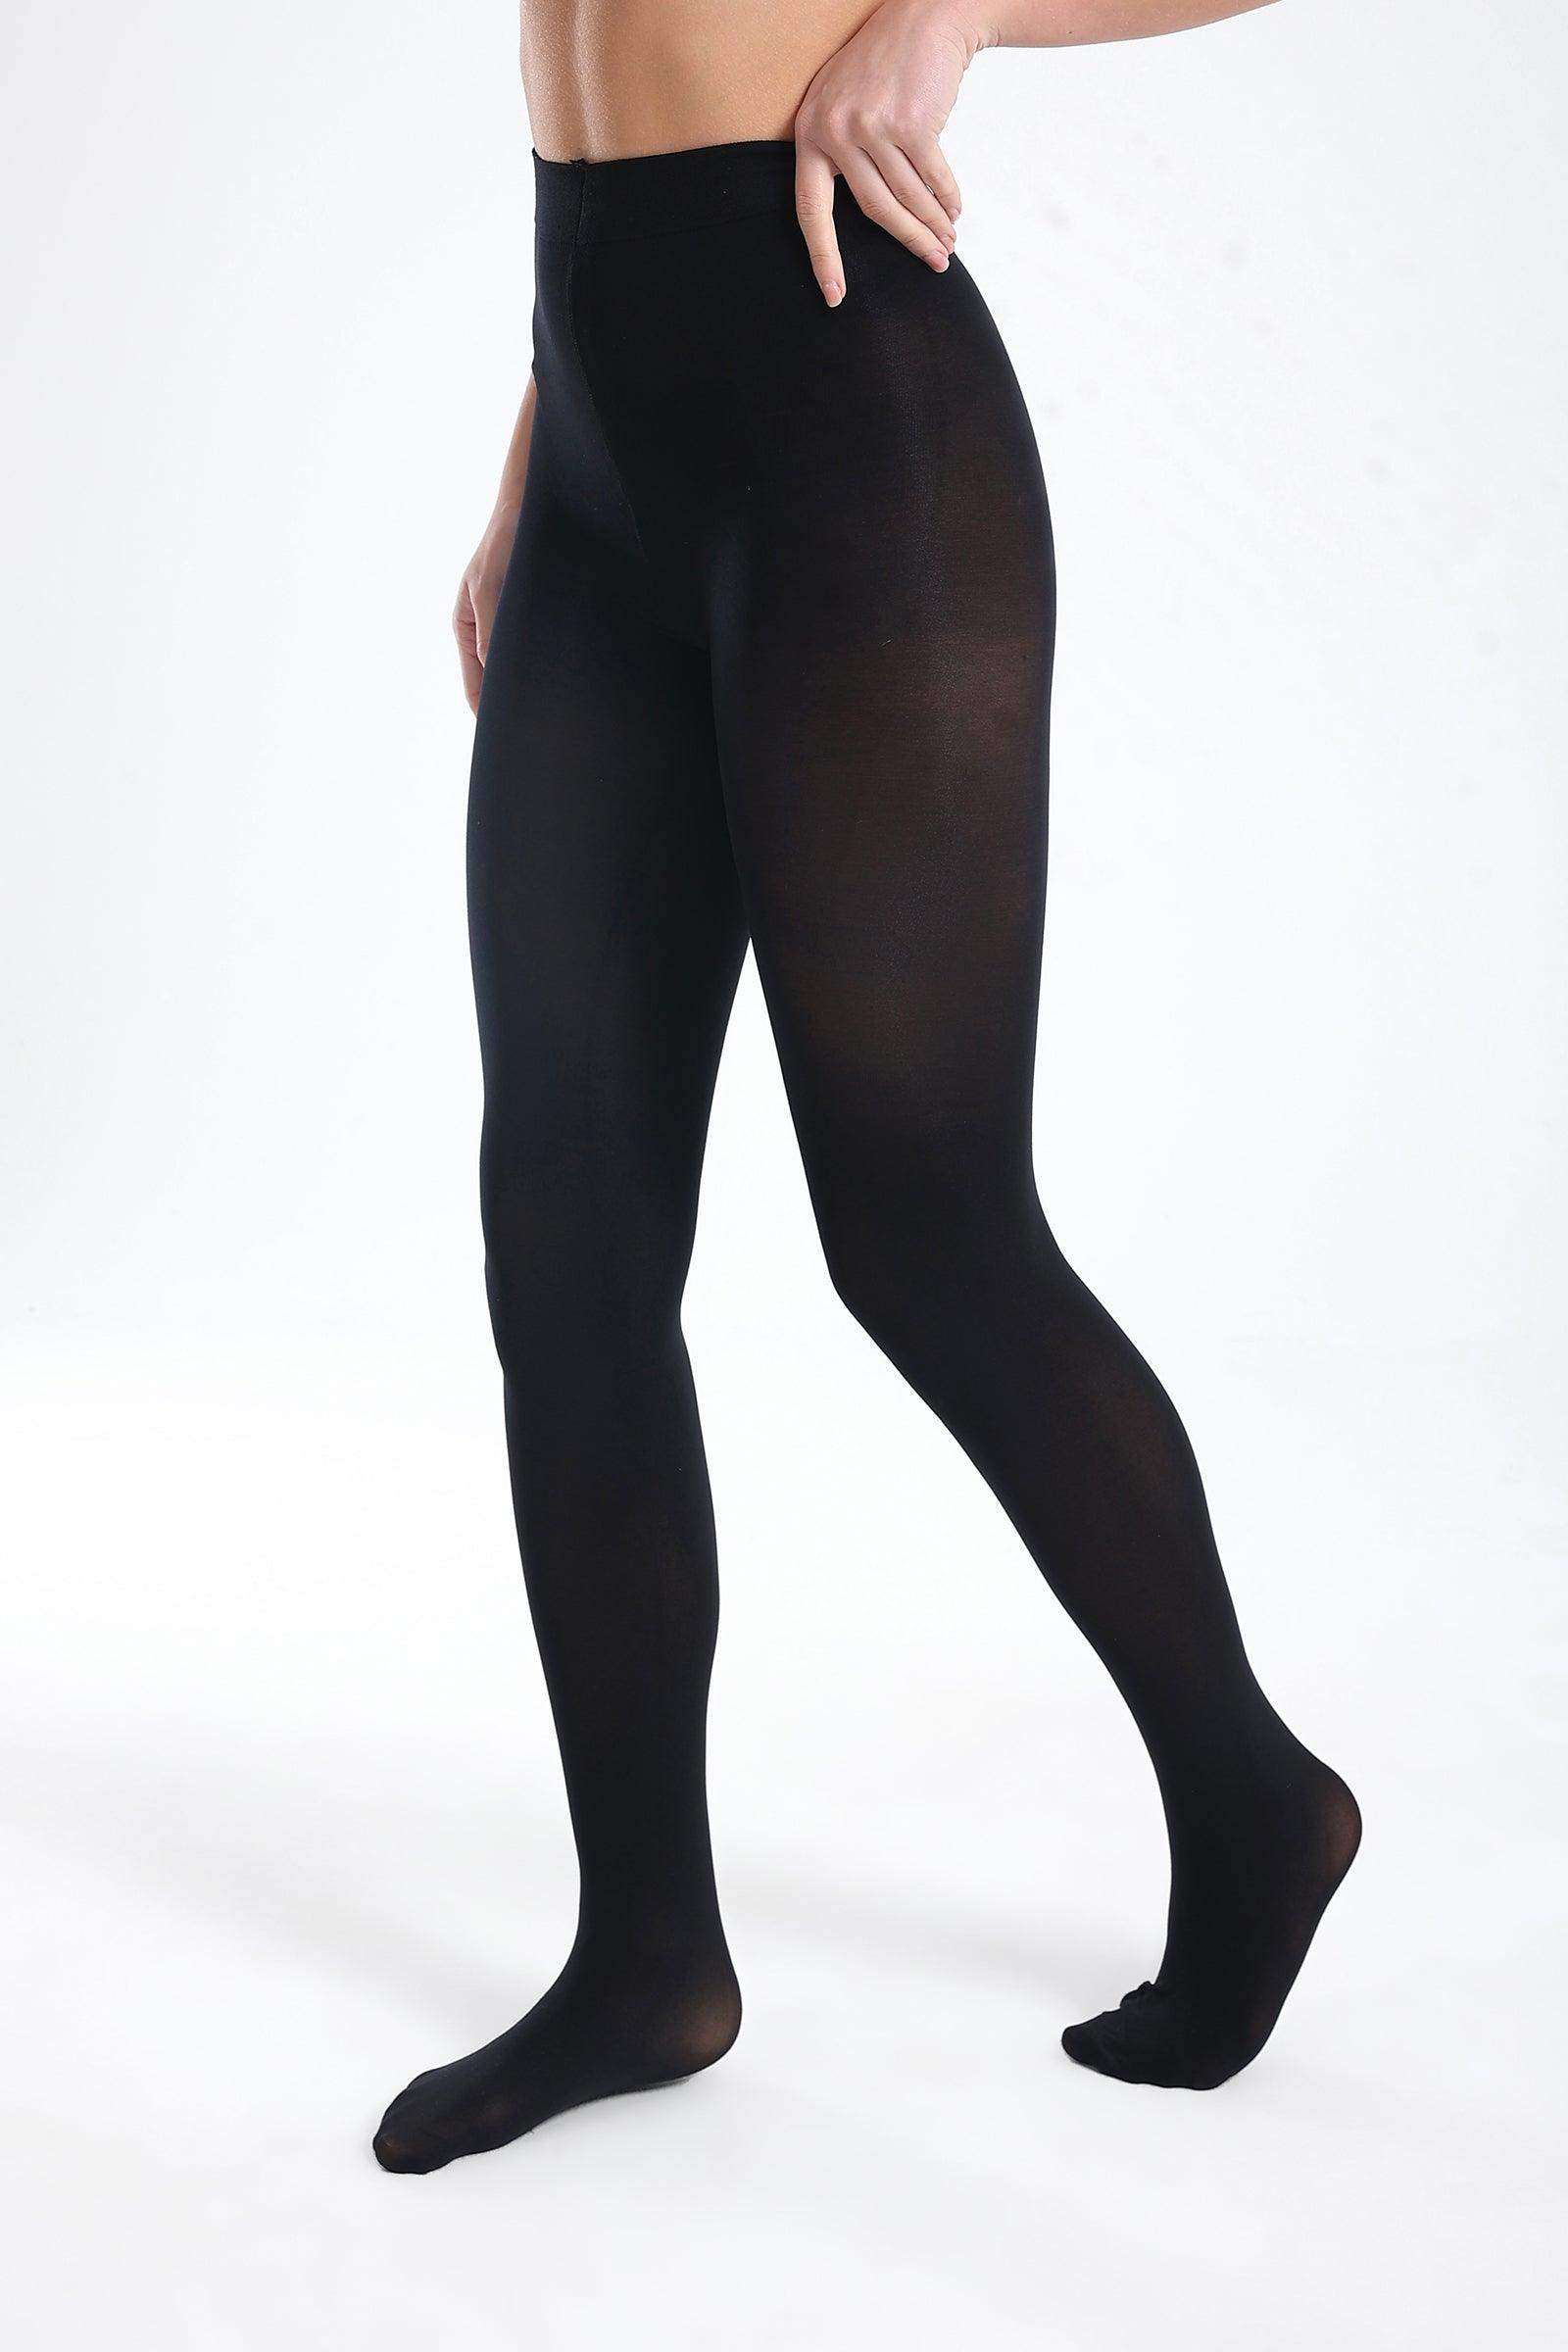 Carina Solid Slim Fit Legging Pants For Women - Beige